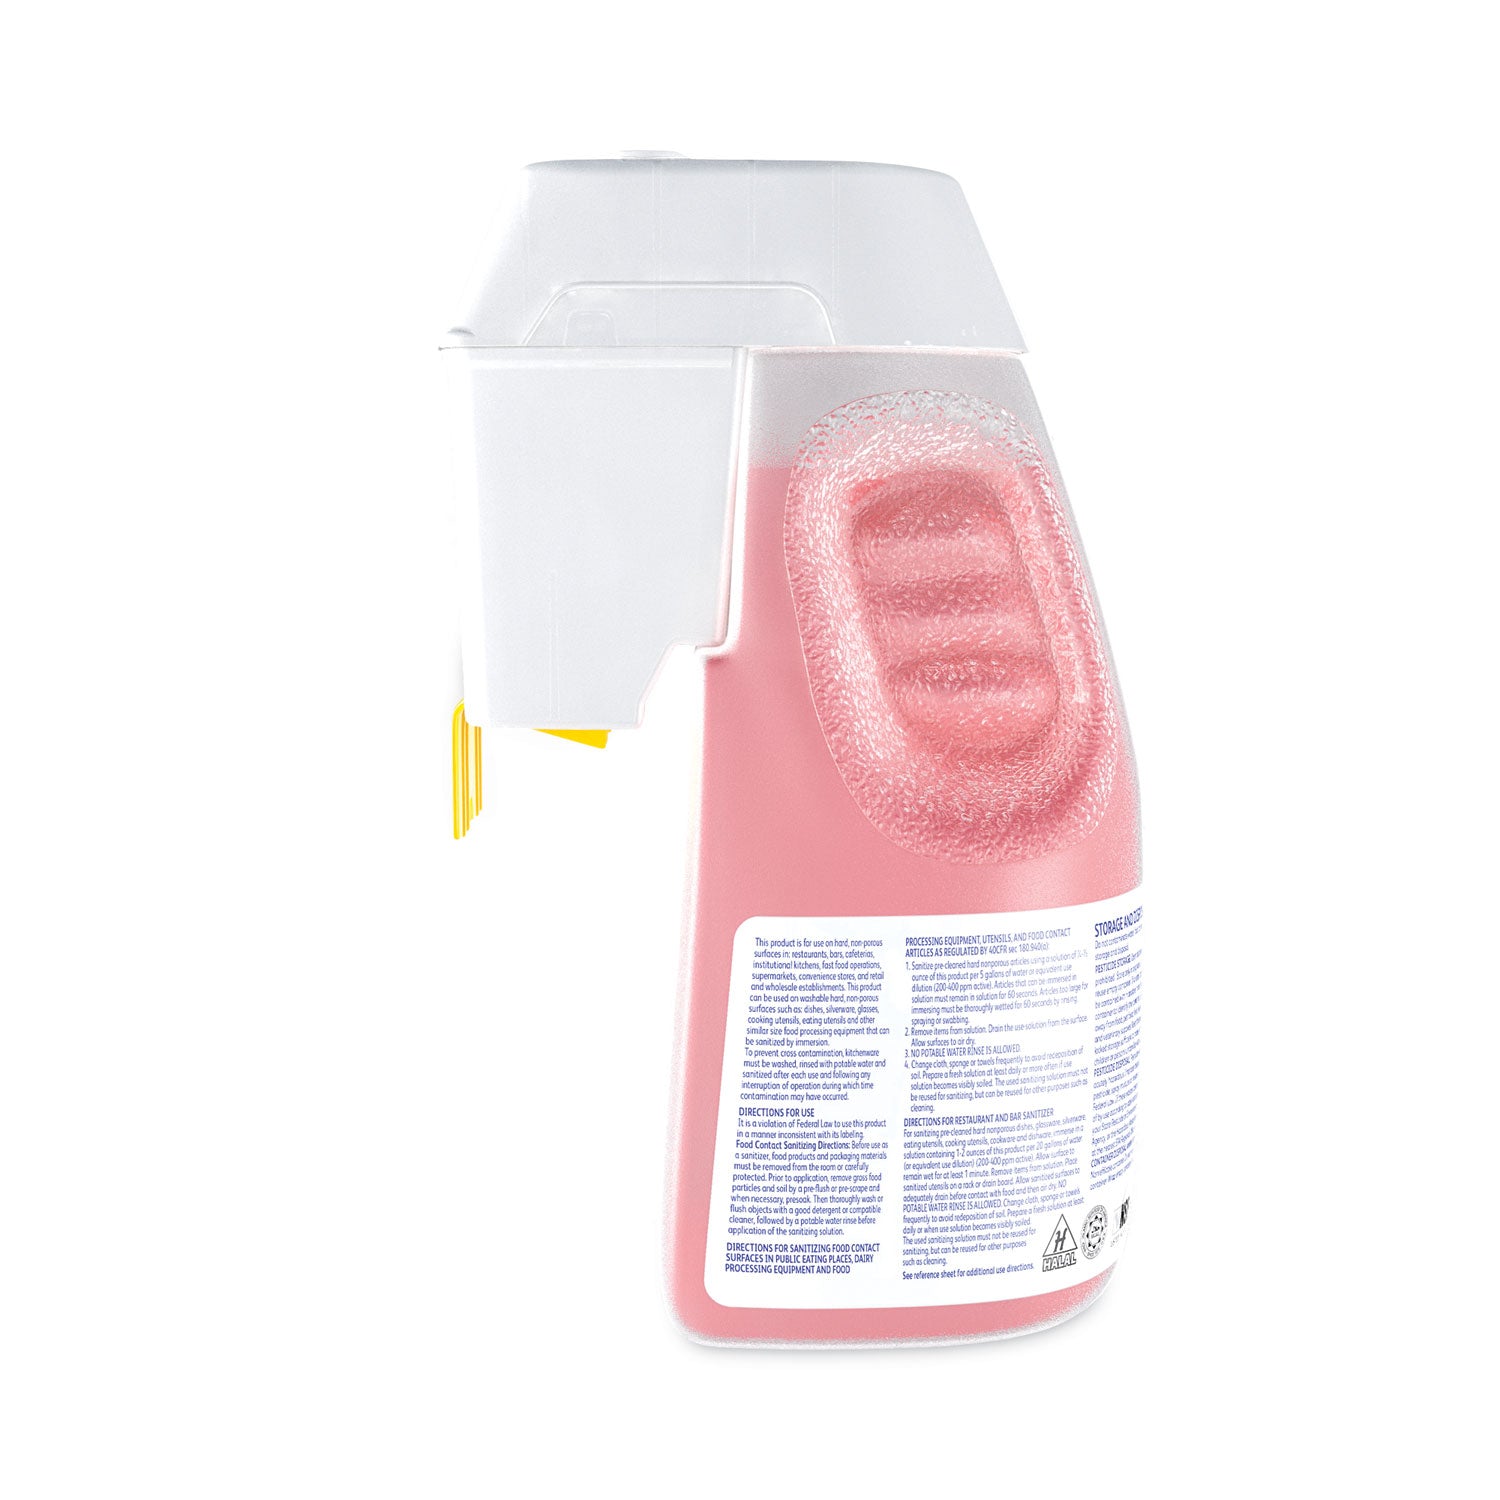 final-step-sanitizer-liquid-25-l-intake-system_dvo101105267 - 2